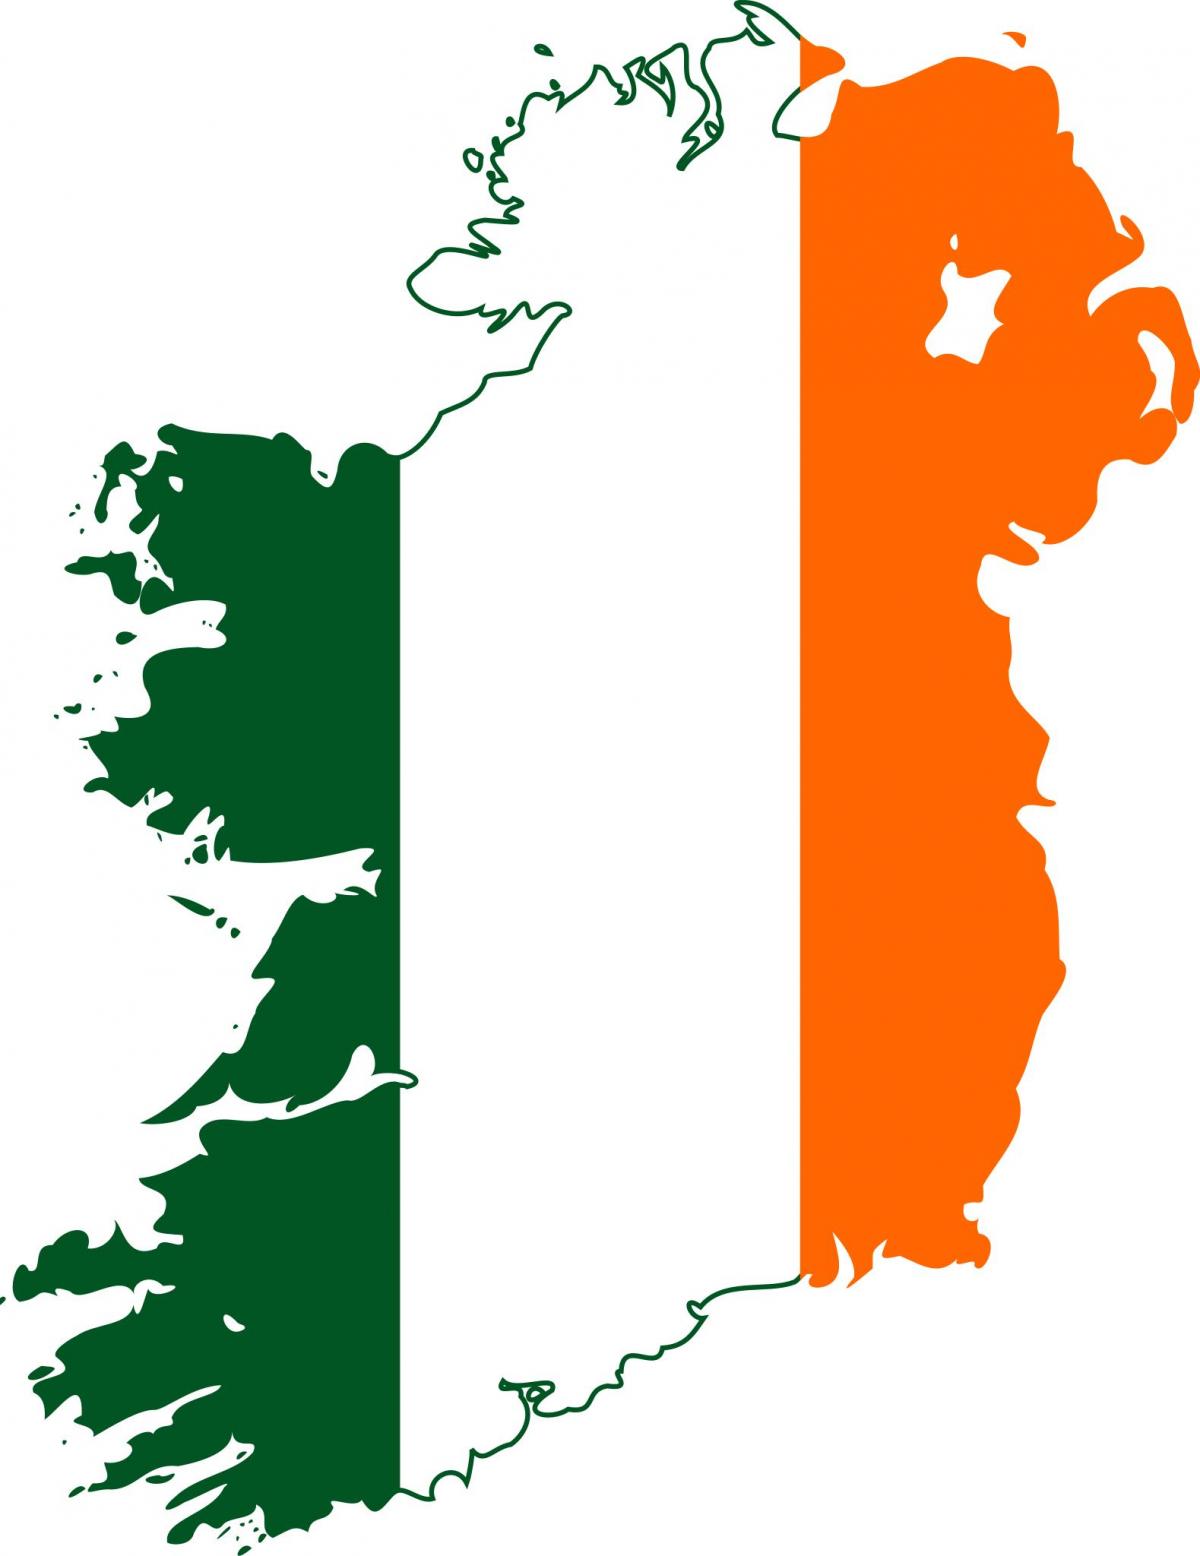 Mapa de la bandera de Irlanda